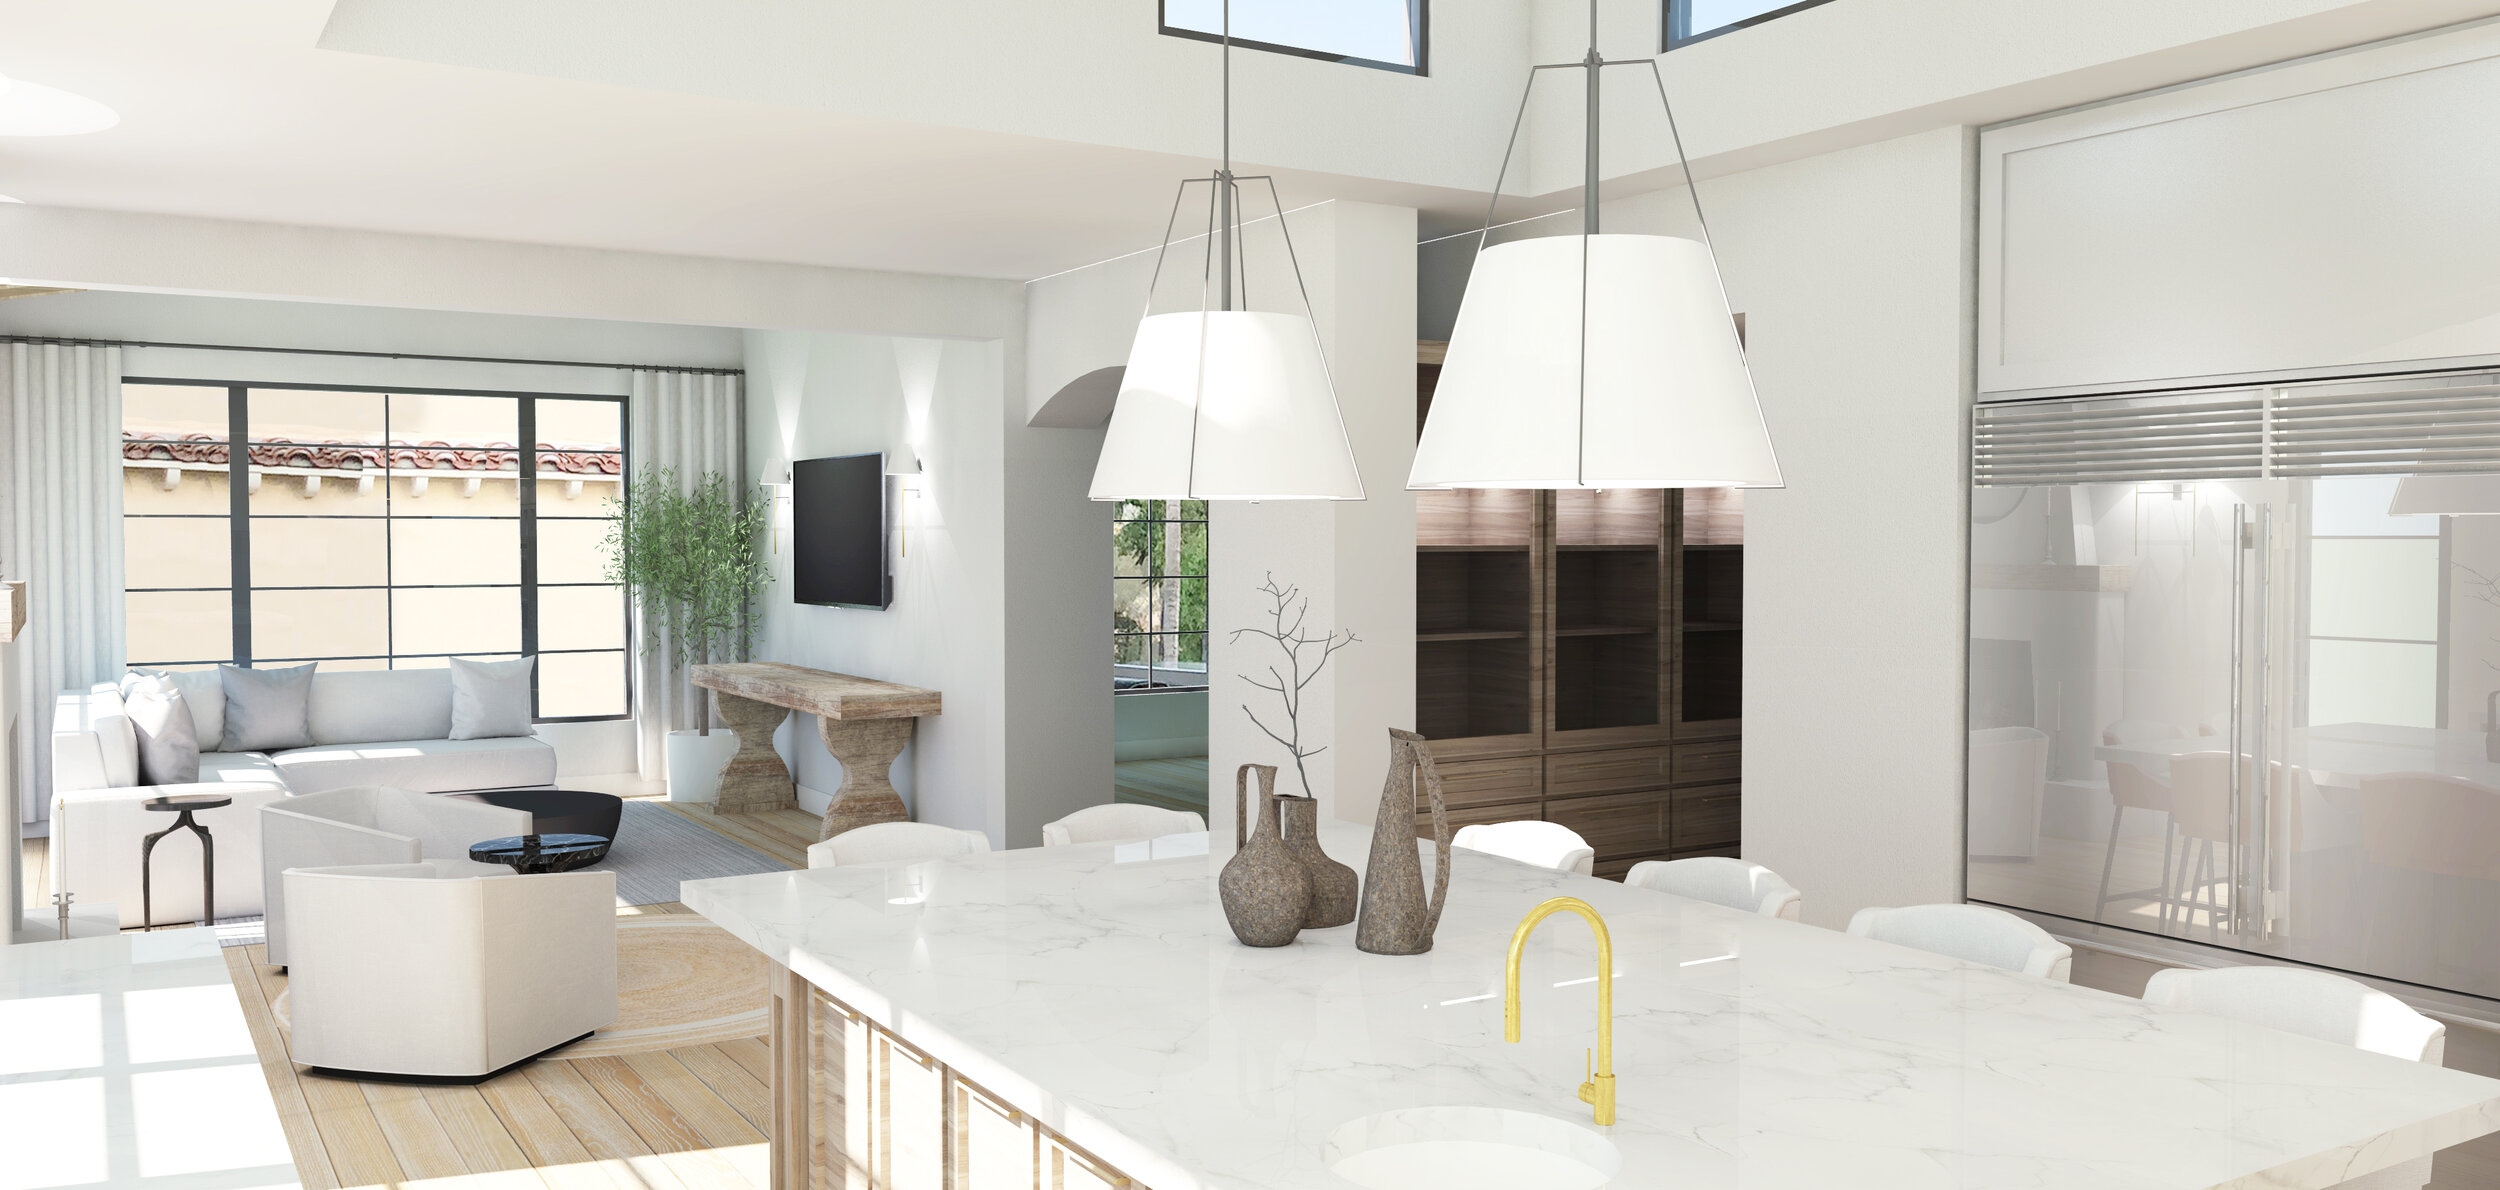 liz-tapper-interiors-kitchen-family room-remodel-interior-design-rendering.jpg